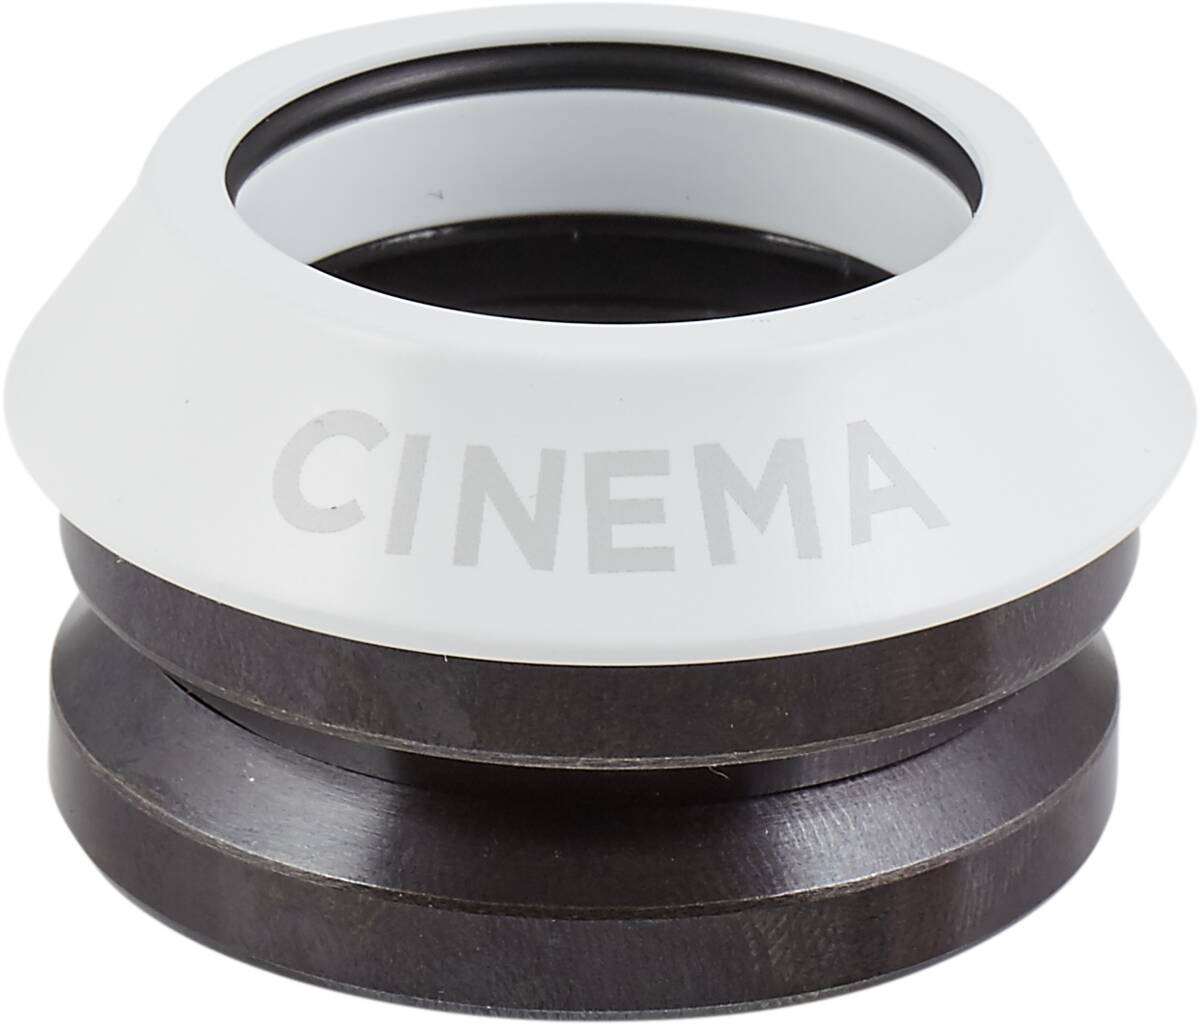 Cinema Lift Kit Headset (Vit) -  Wallride